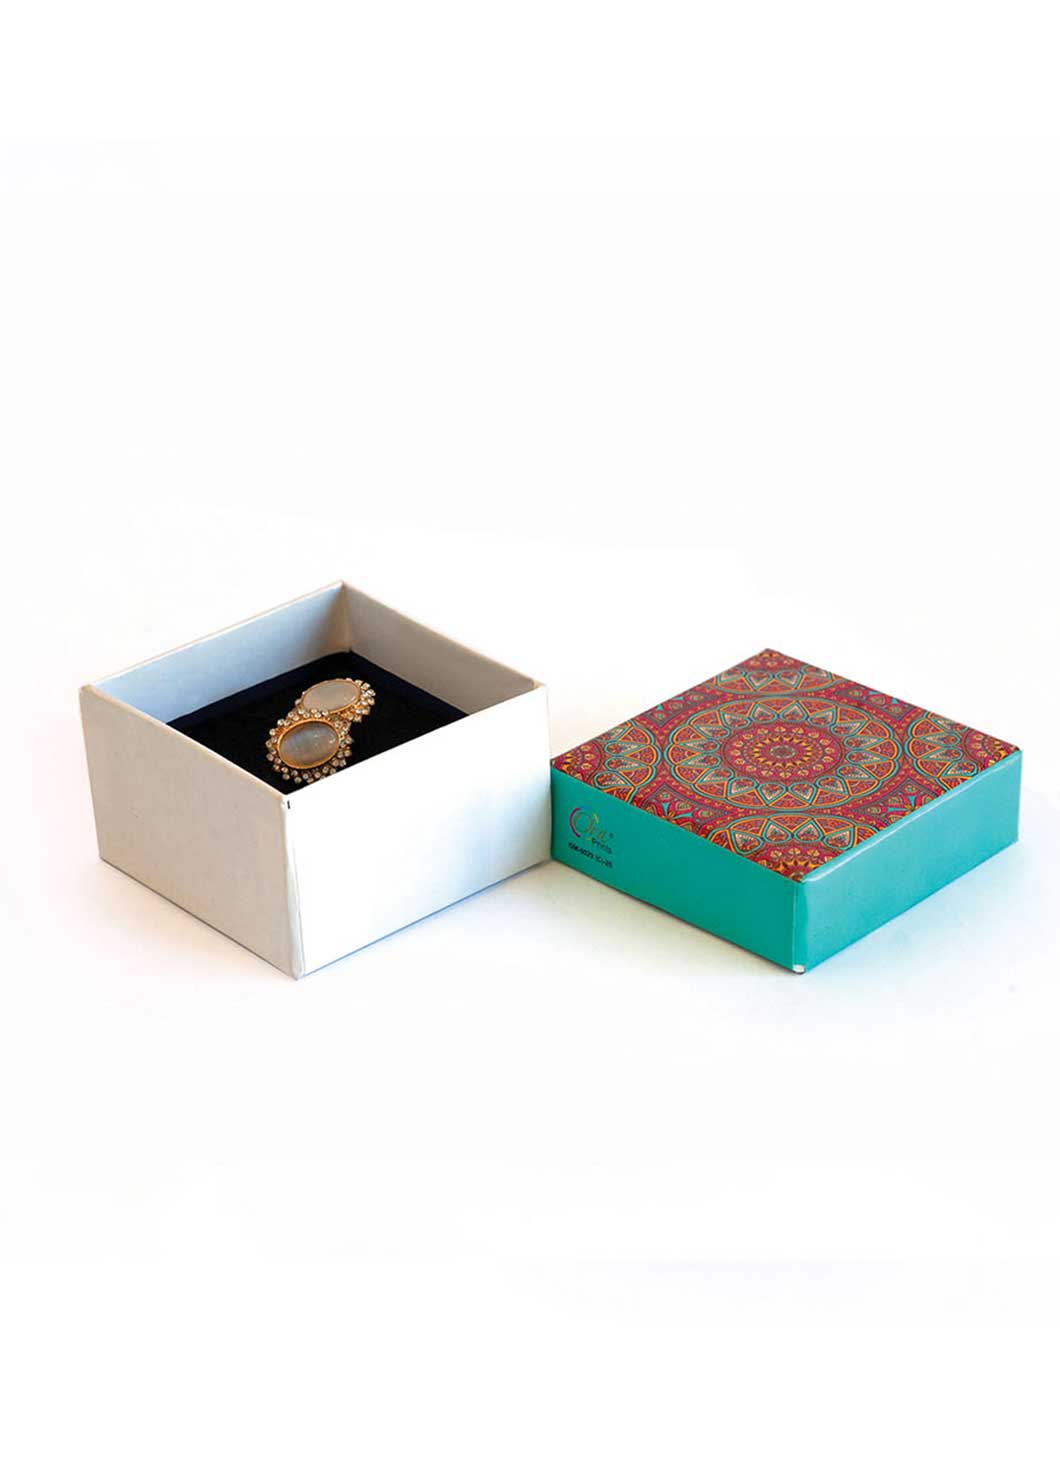 Mandala Design Box for packing gifts